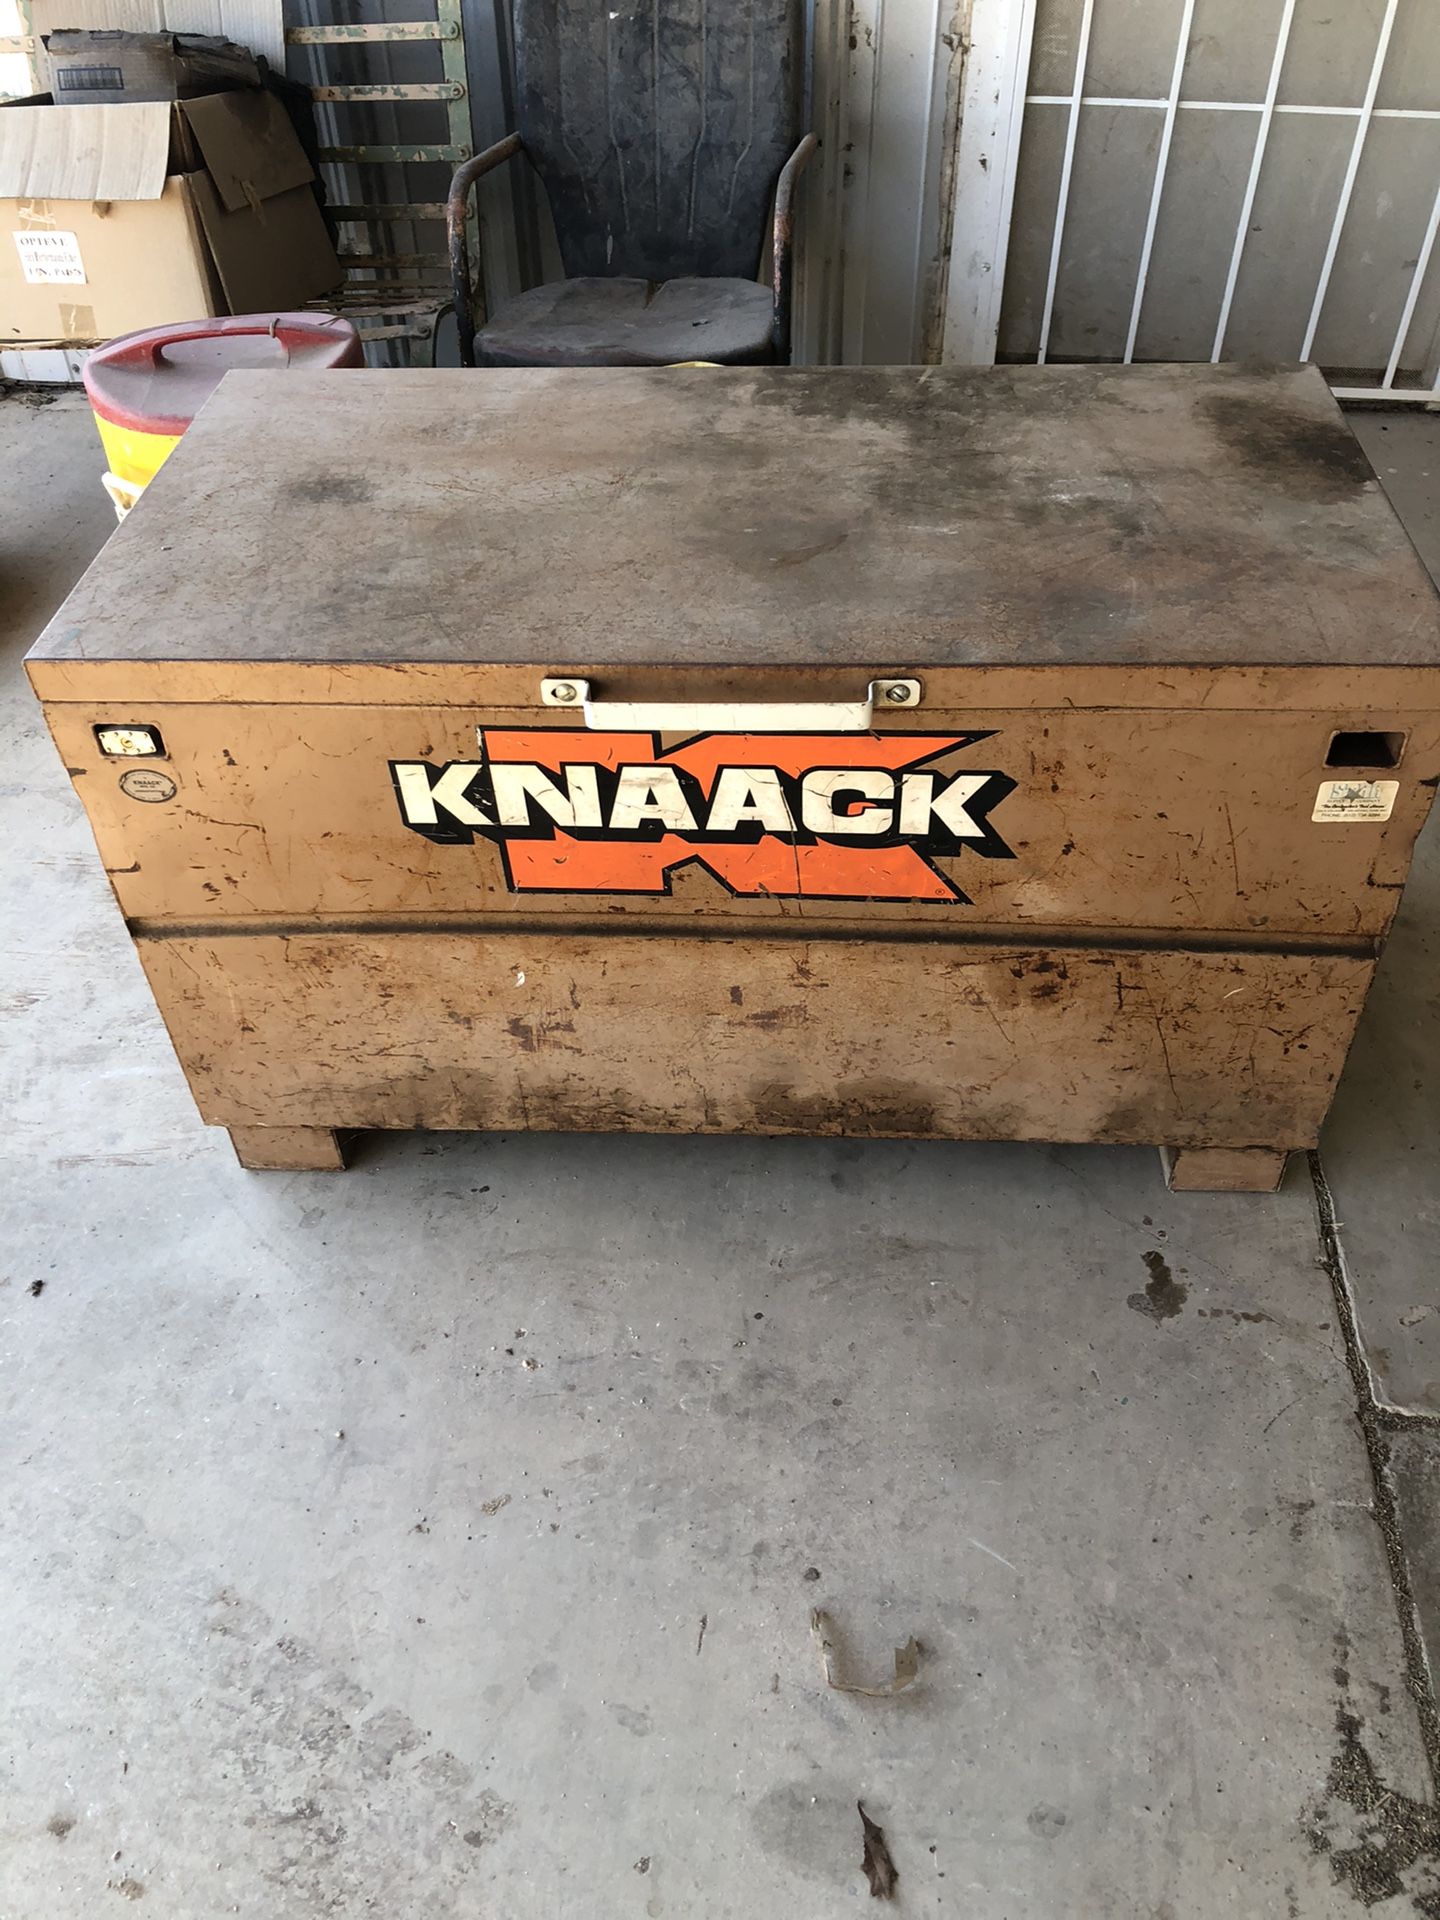 KNAACK tool box “4824”